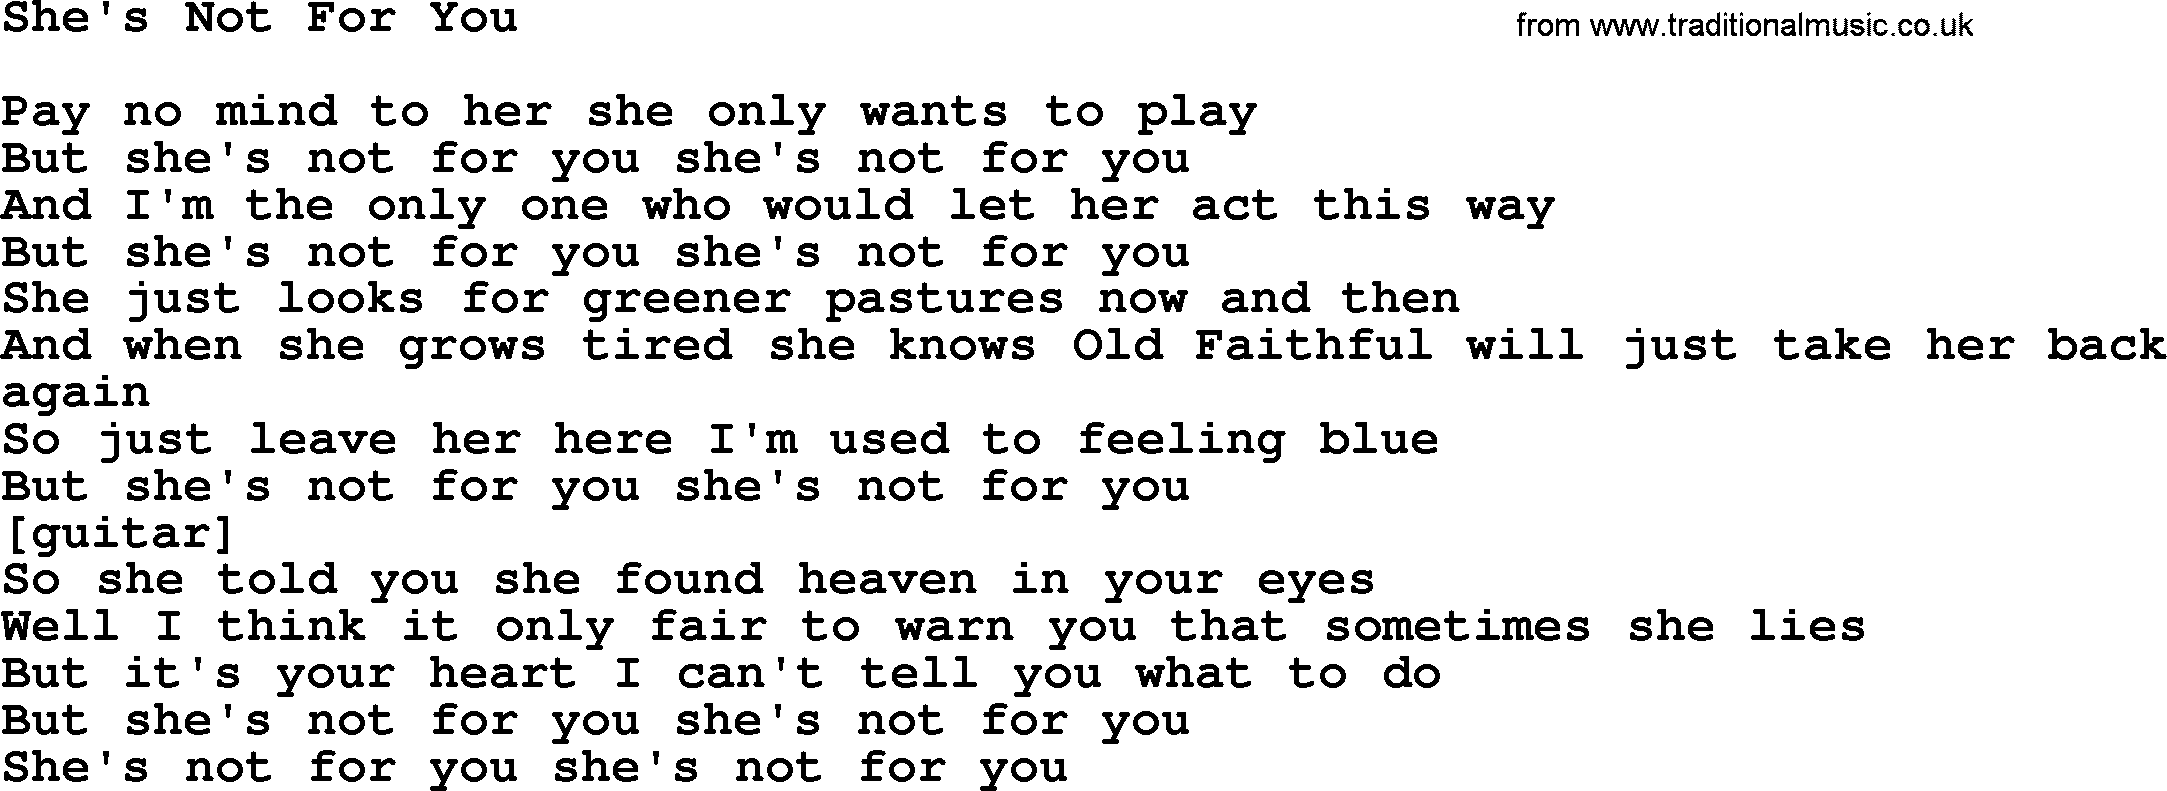 Willie Nelson song: She's Not For You lyrics